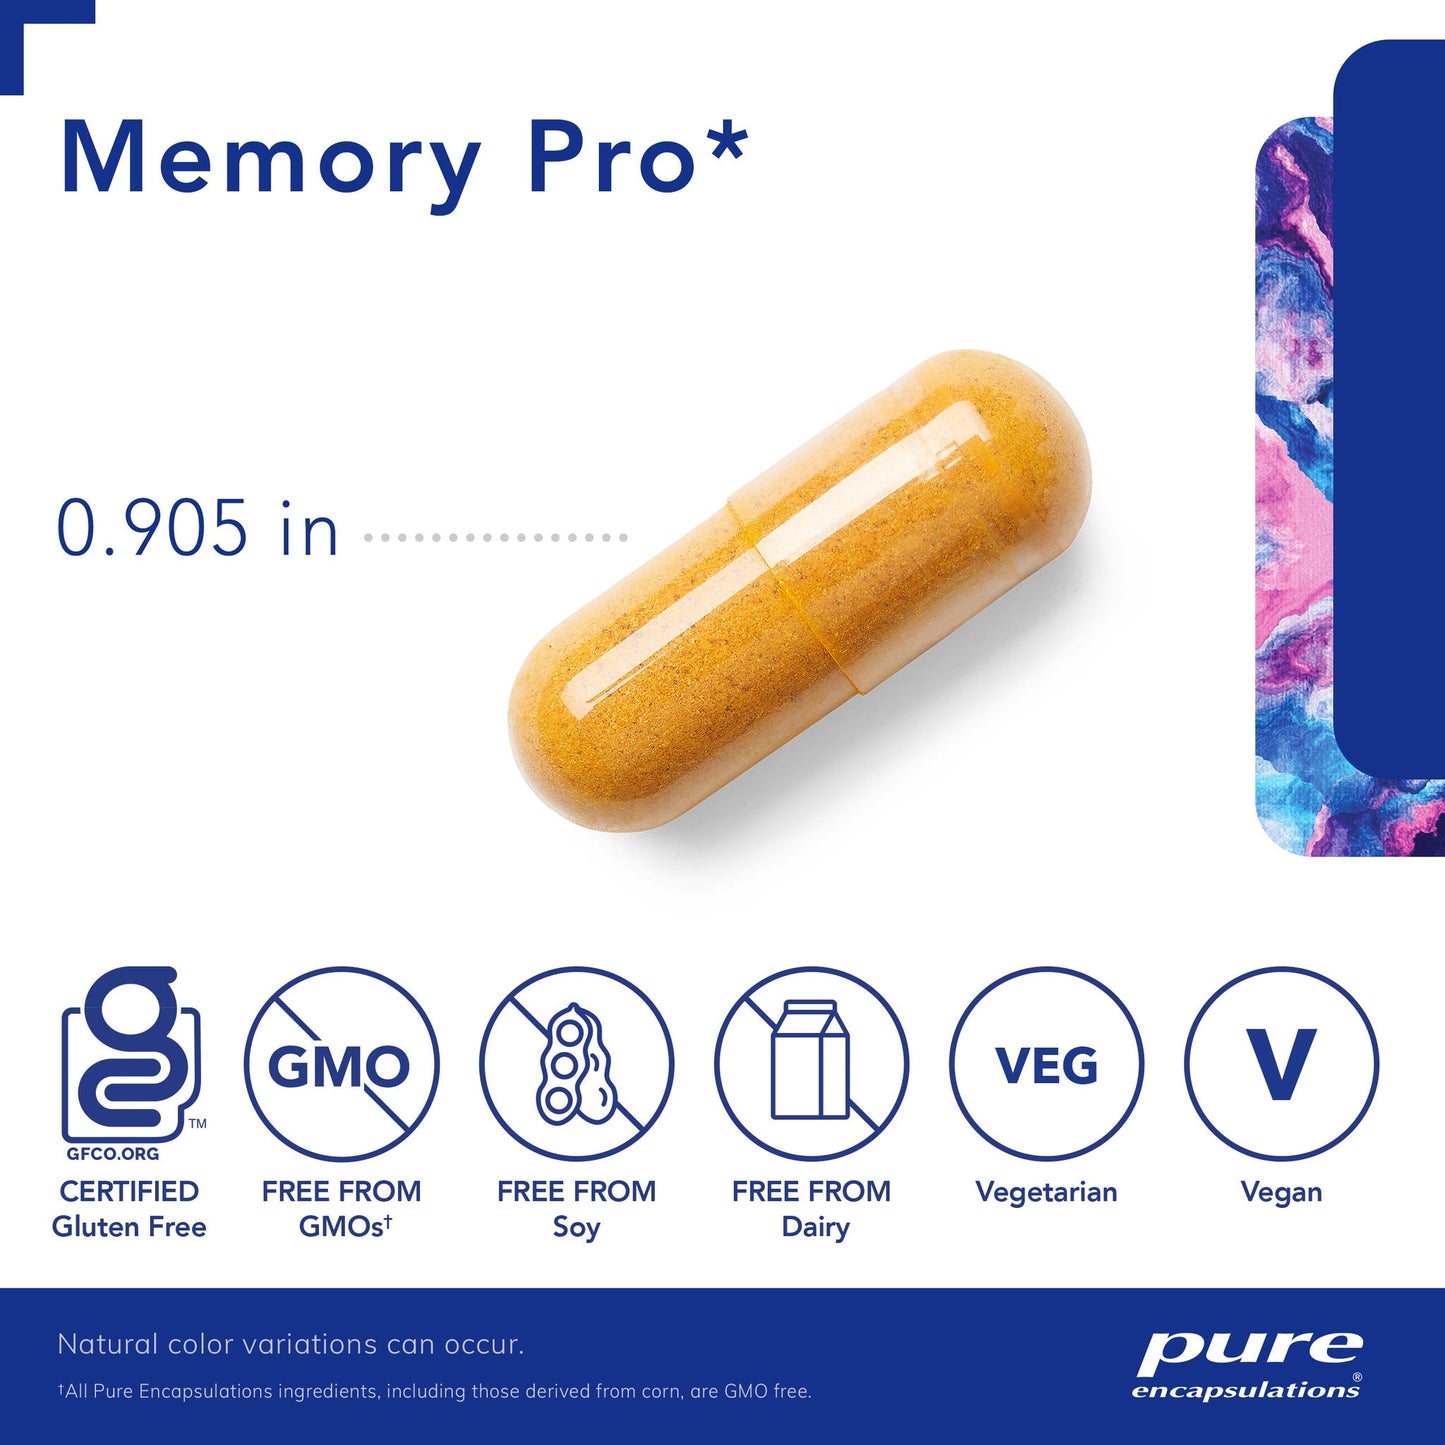 Memory Pro‡